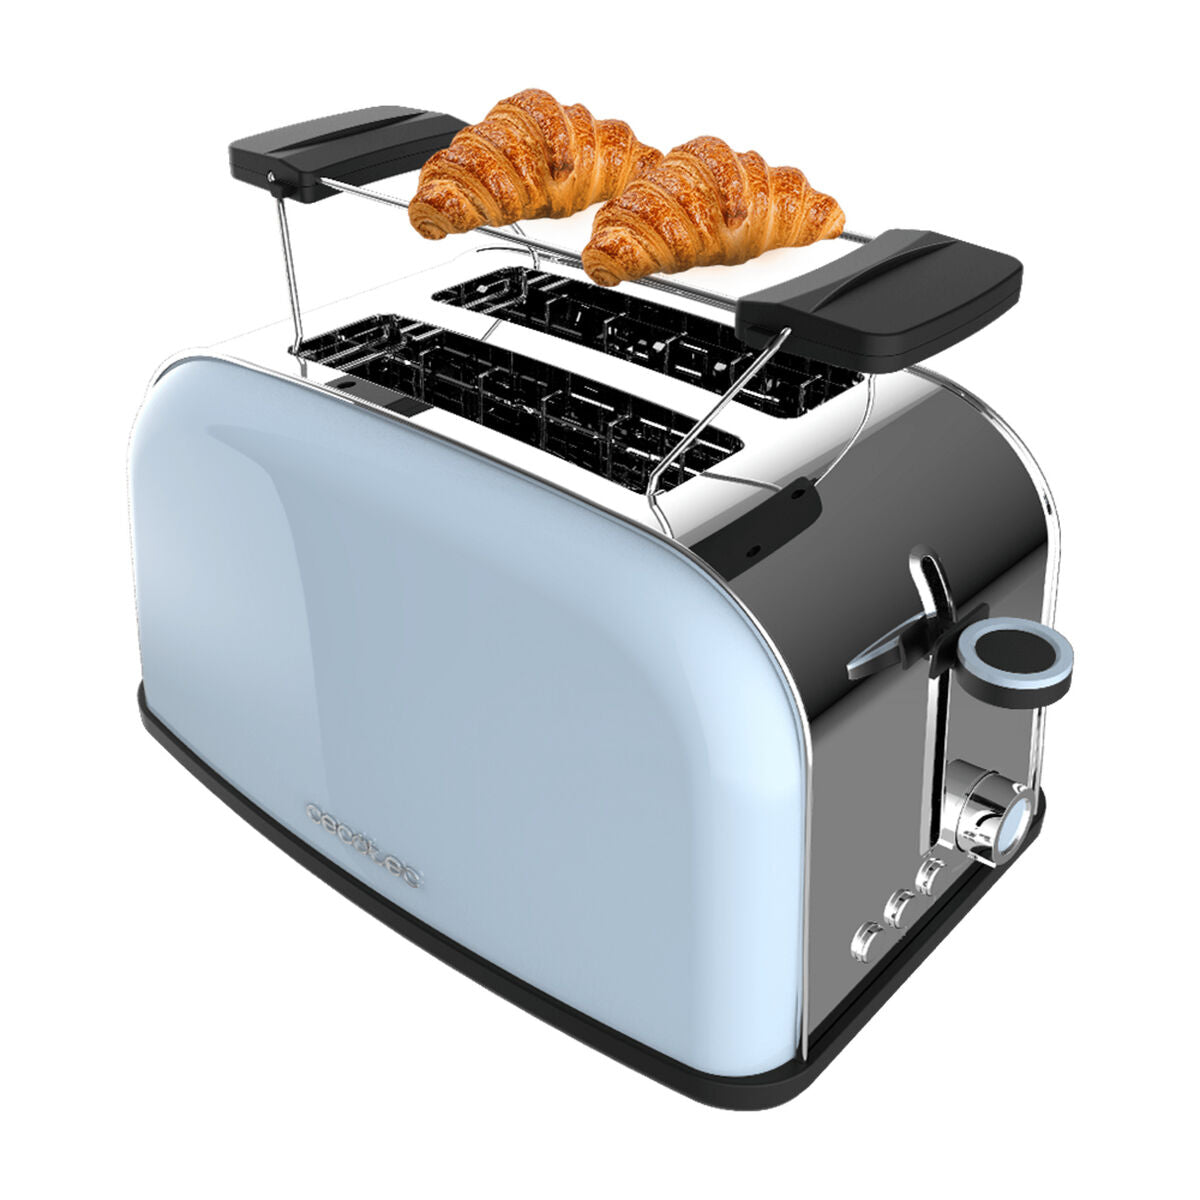 Toaster Cecotec Toastin' time 850 Blue 850 W - CA International  